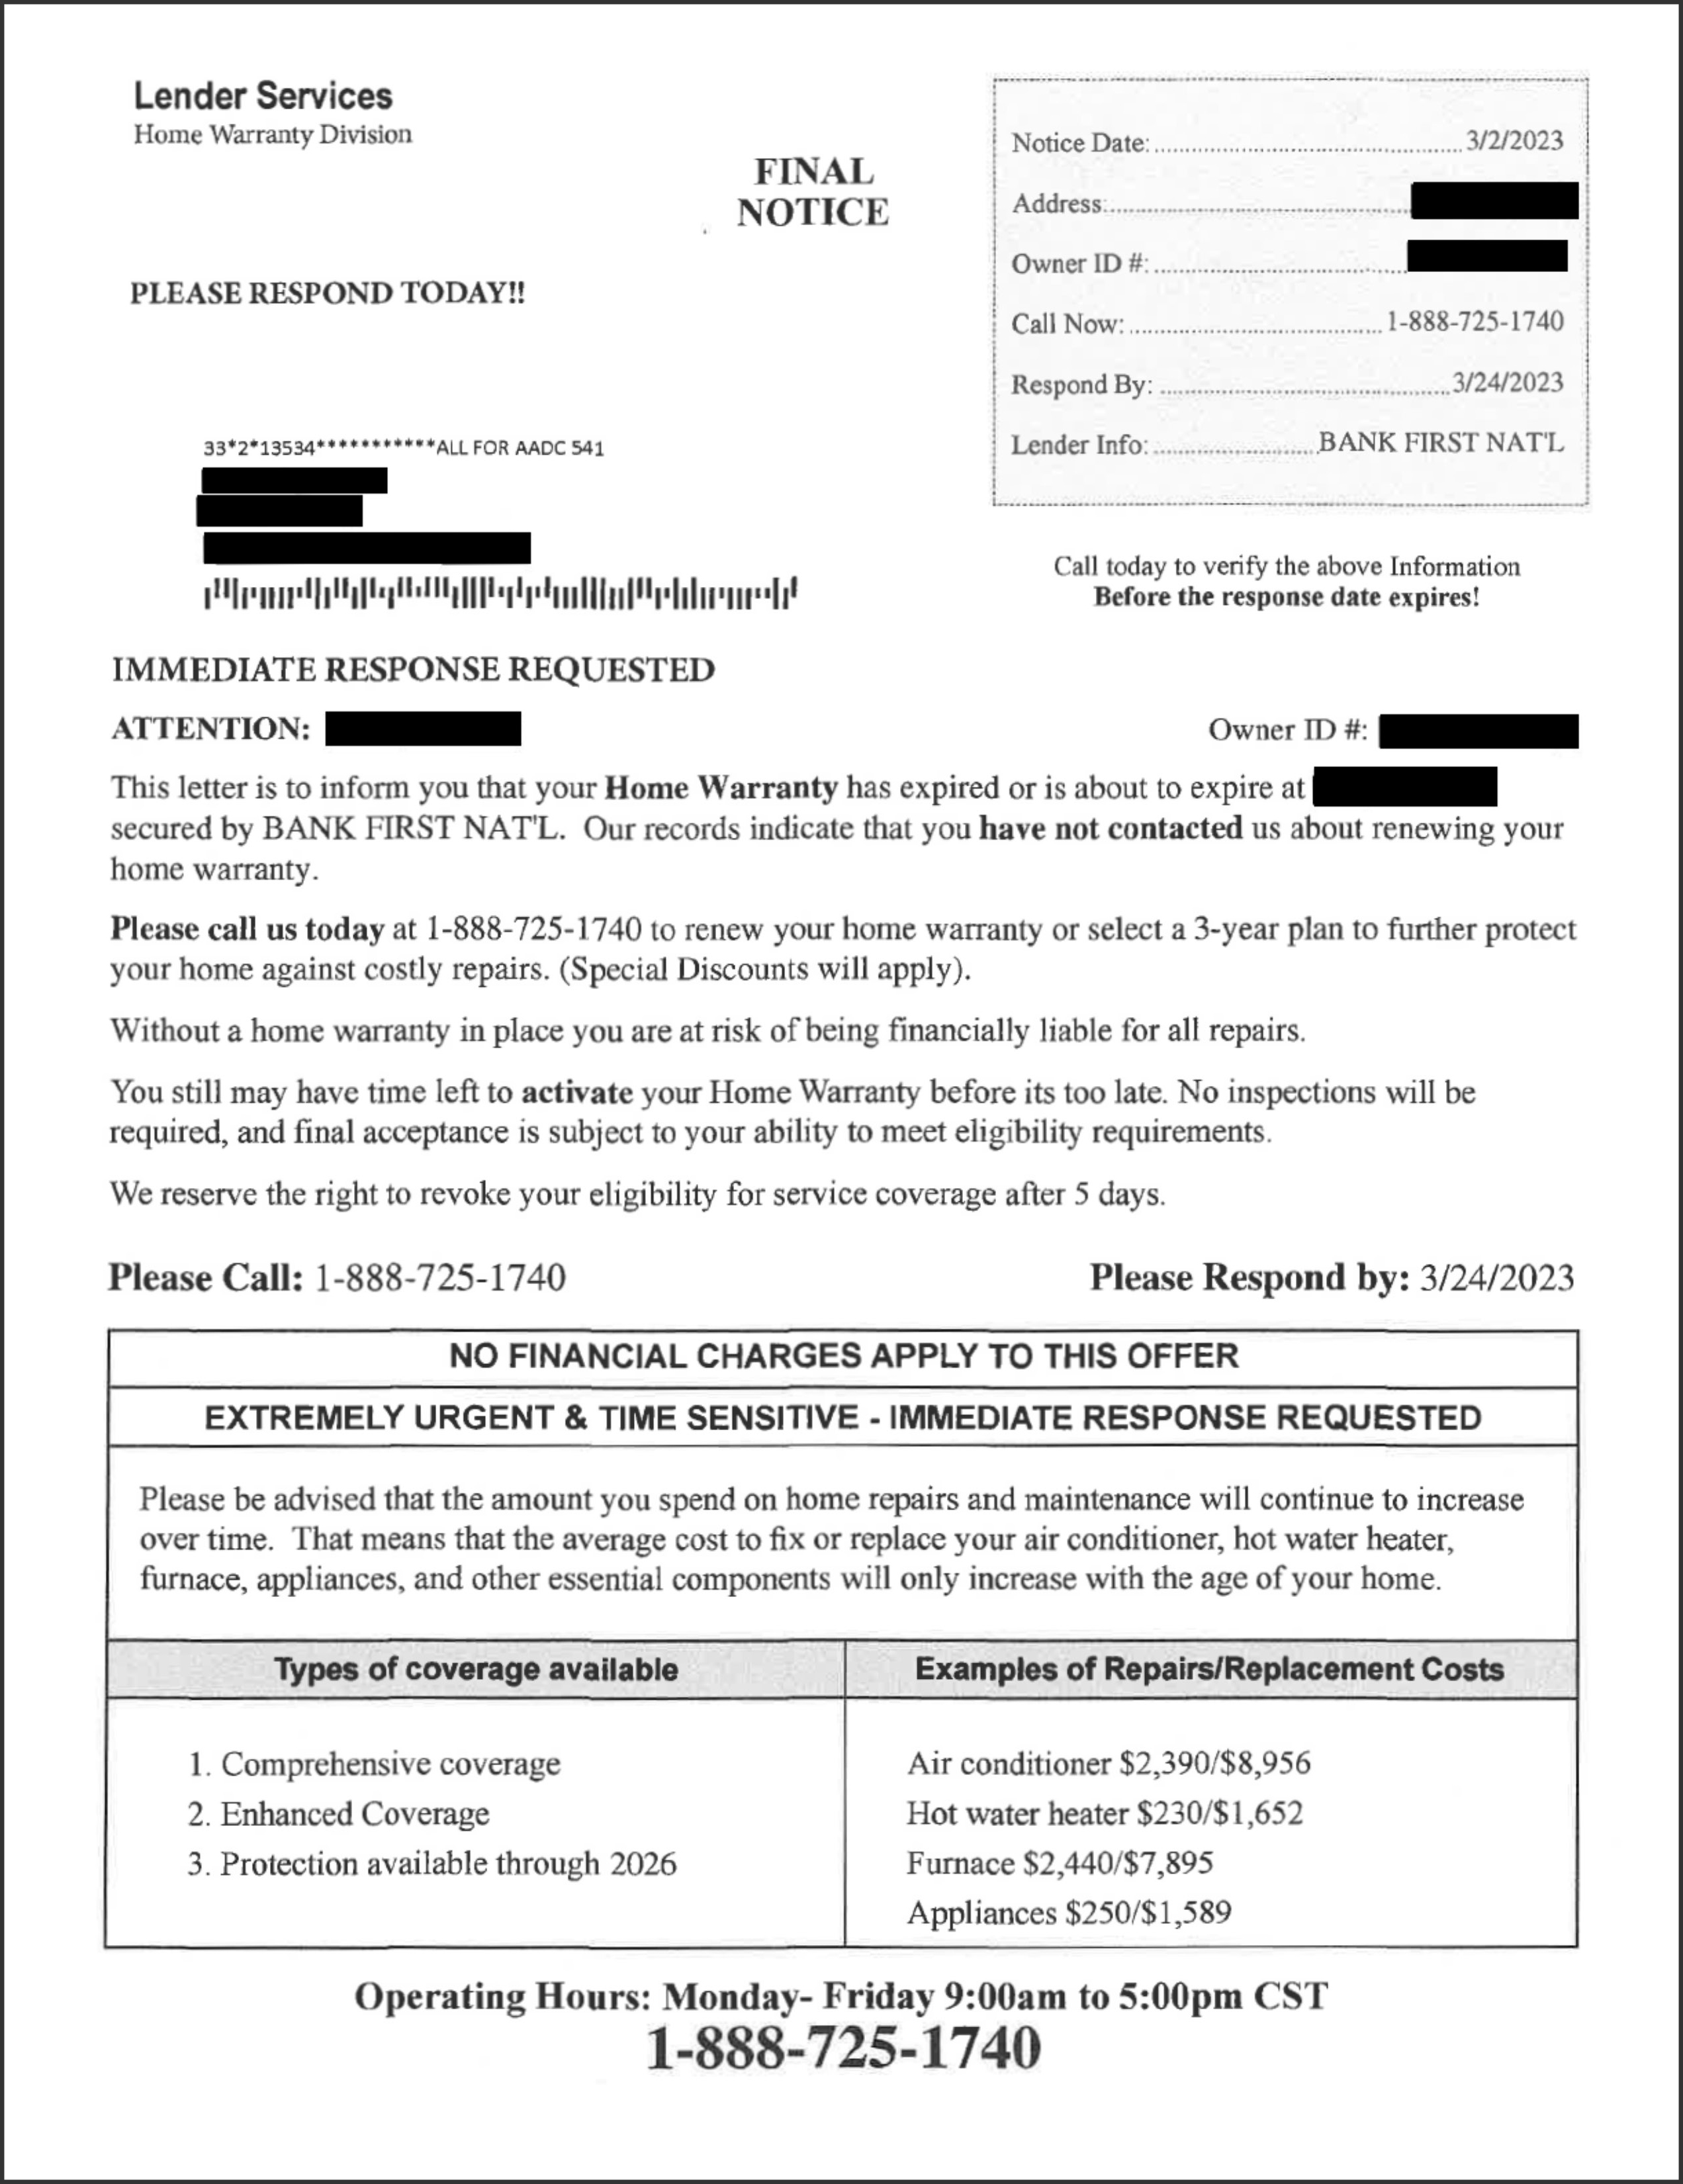 Home Warranty Division Letter